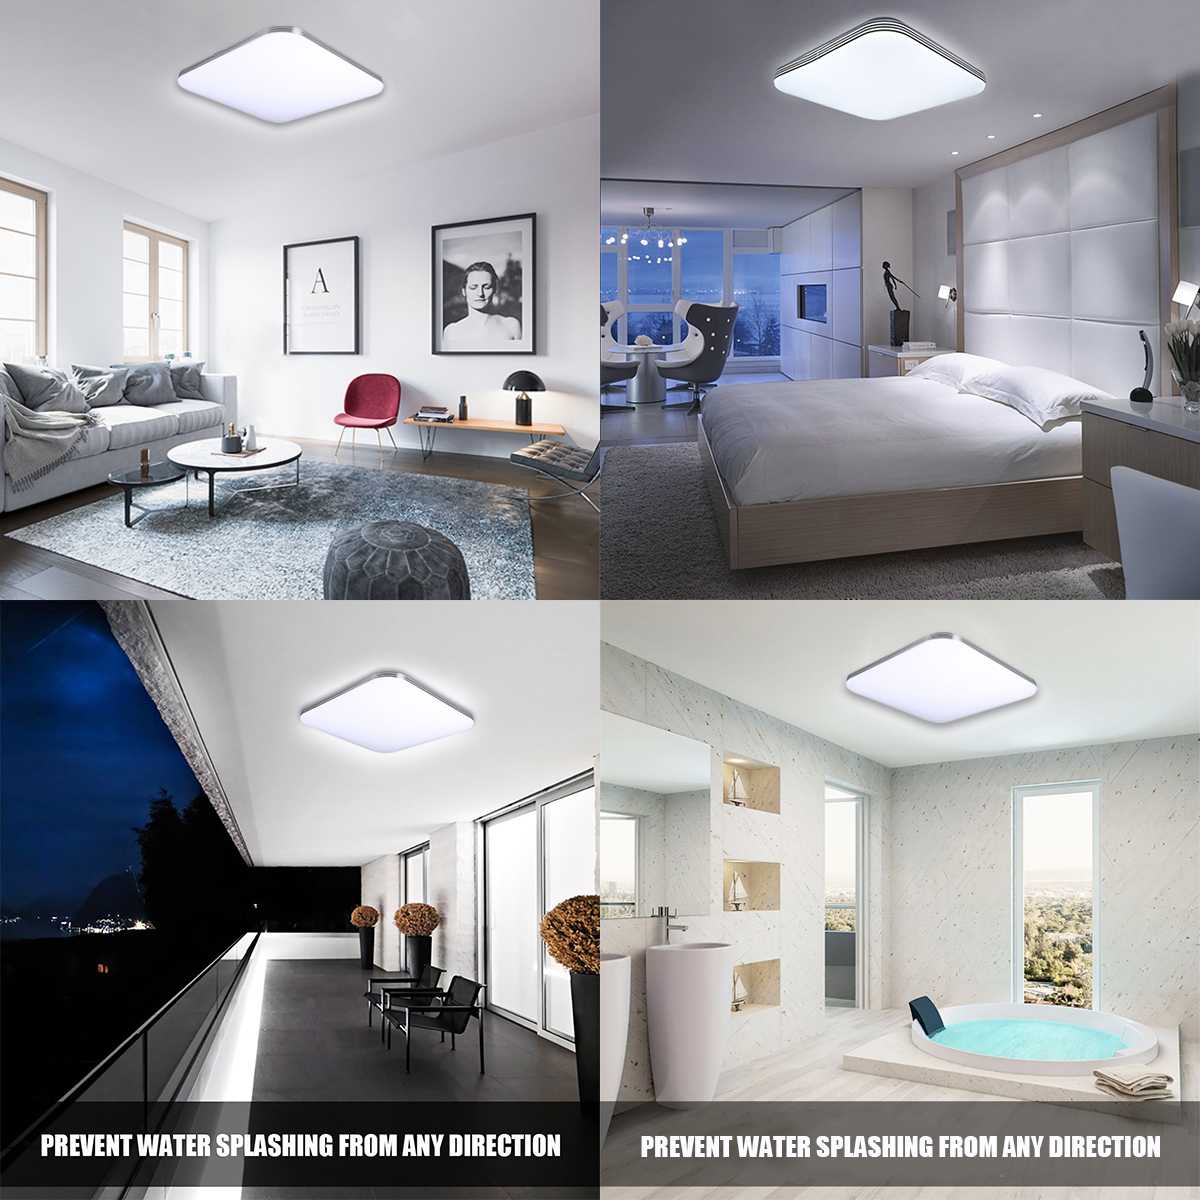 AUGIENB 1600LM 16W 5000K LED Ceiling Lights Modern Lamp Living Room Lighting Fixture Bedroom Kitchen Surface Mount Flush Panel